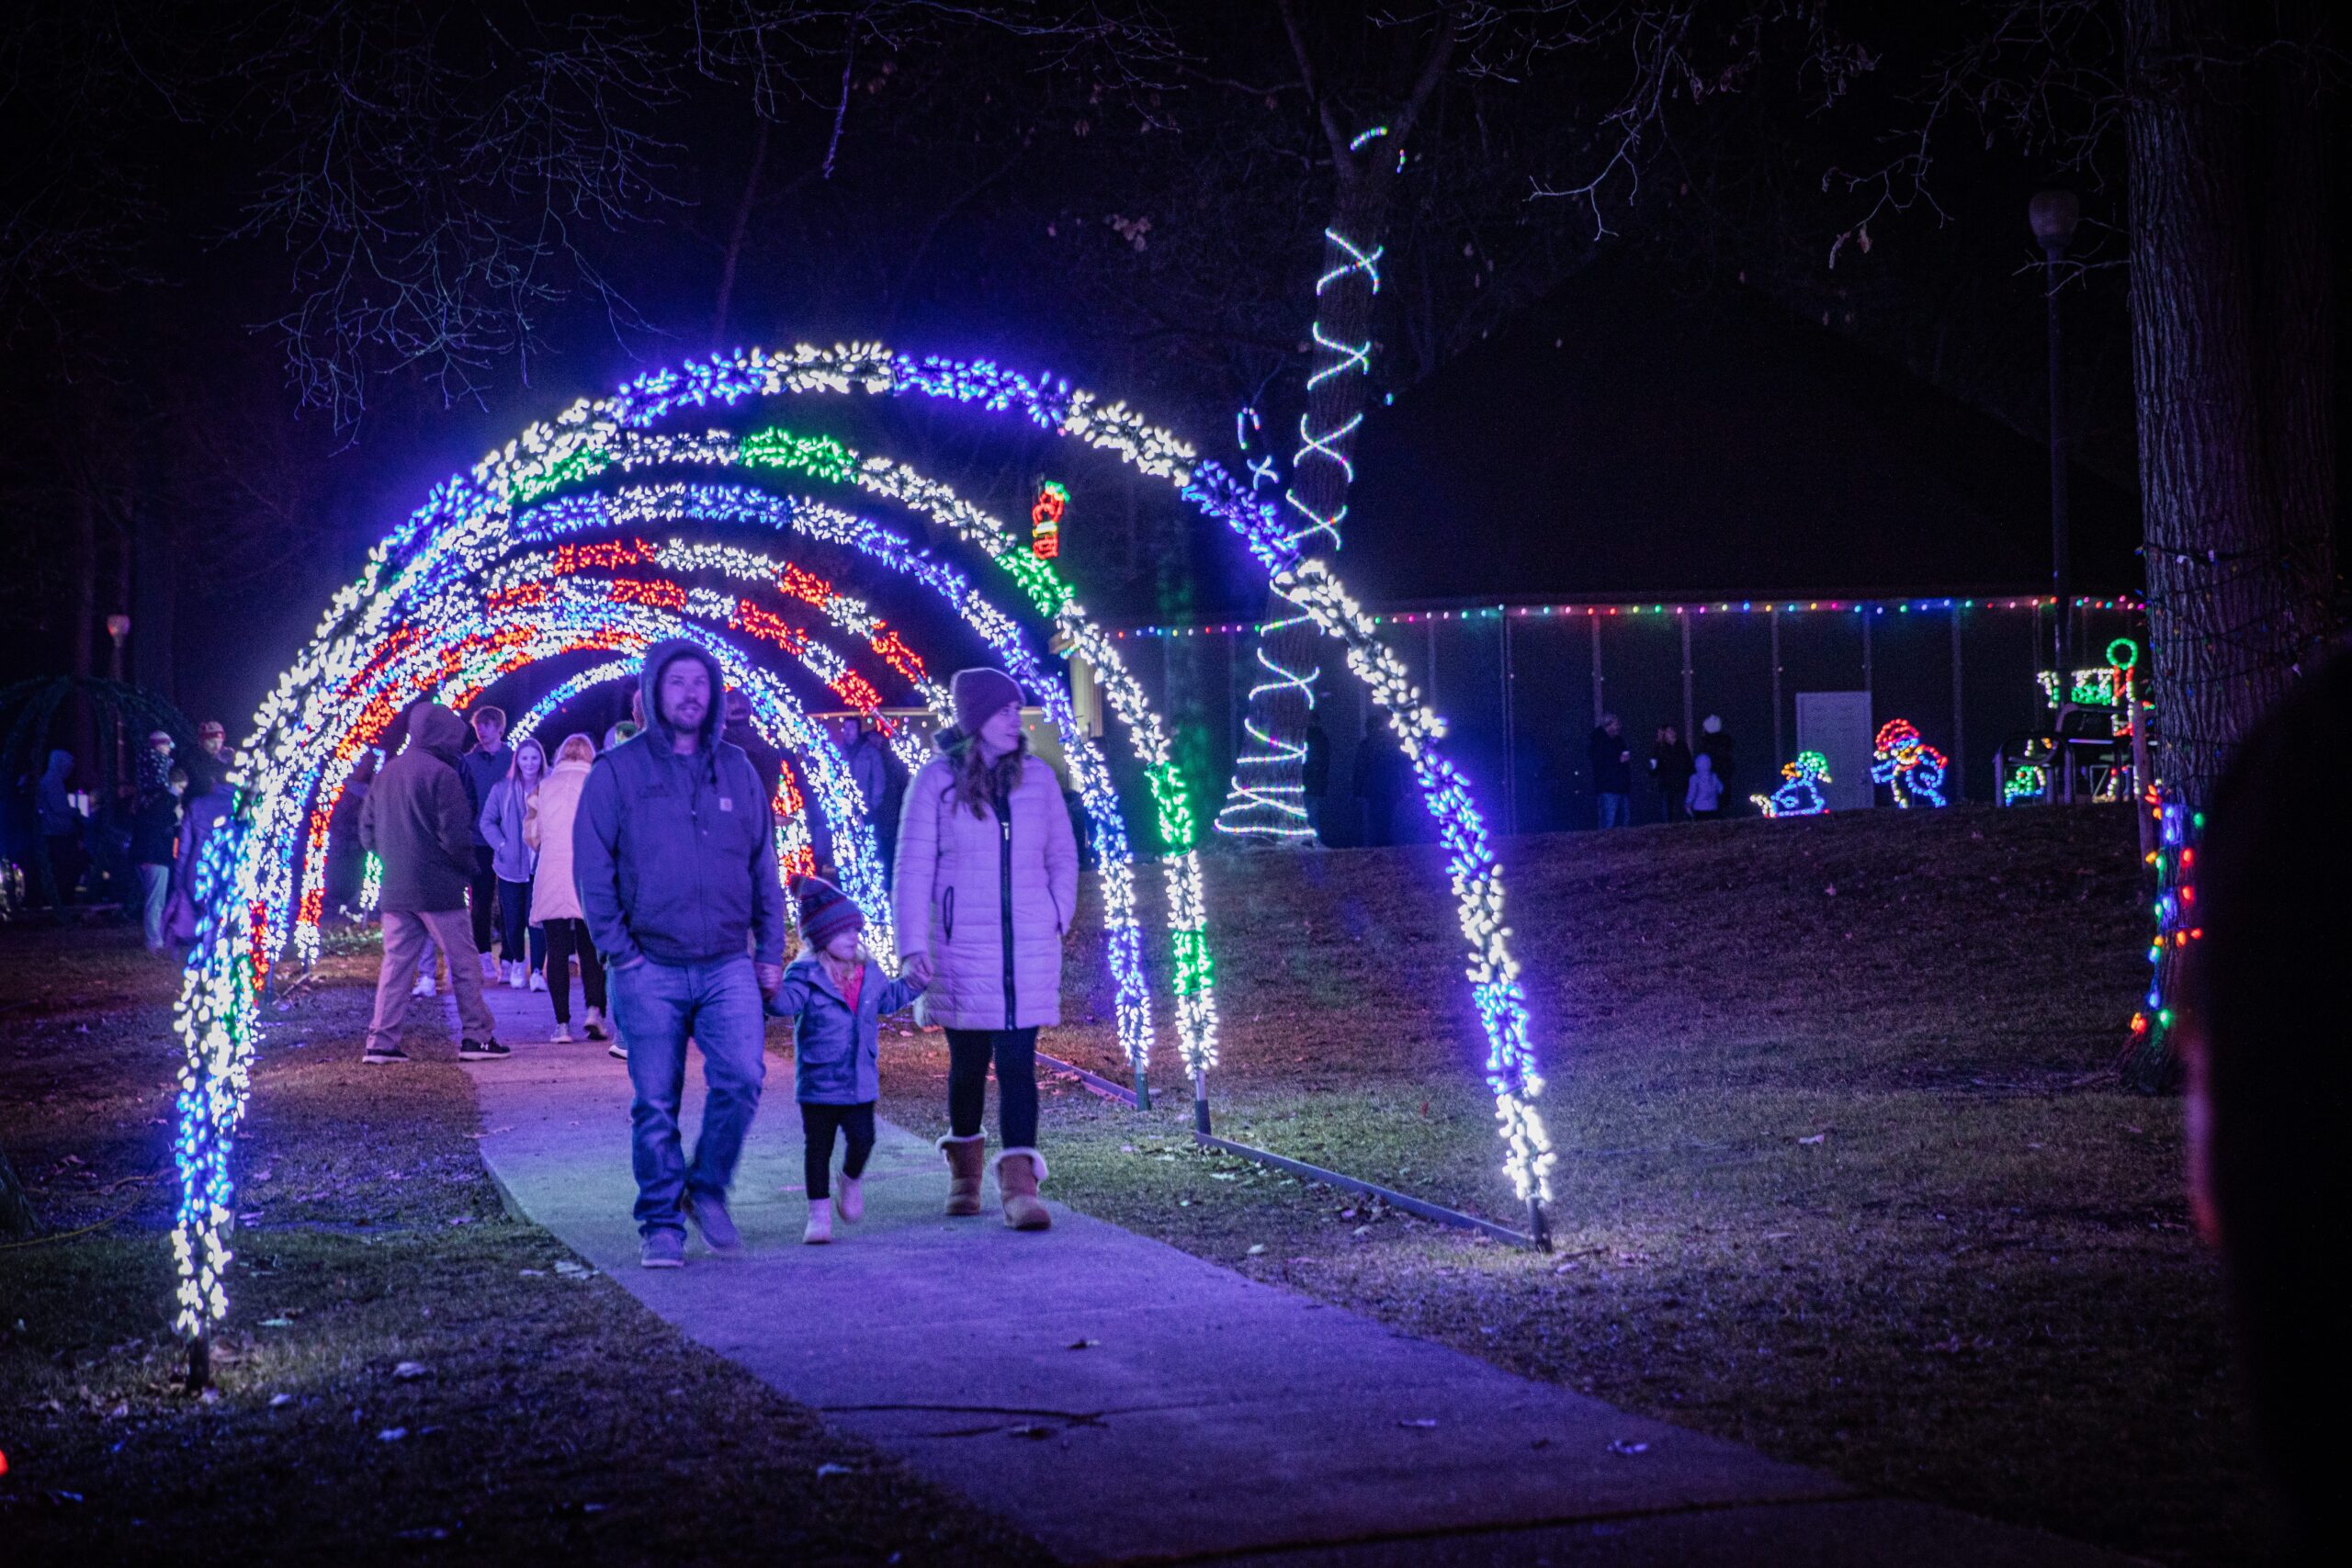 Family walking through a lighting arch